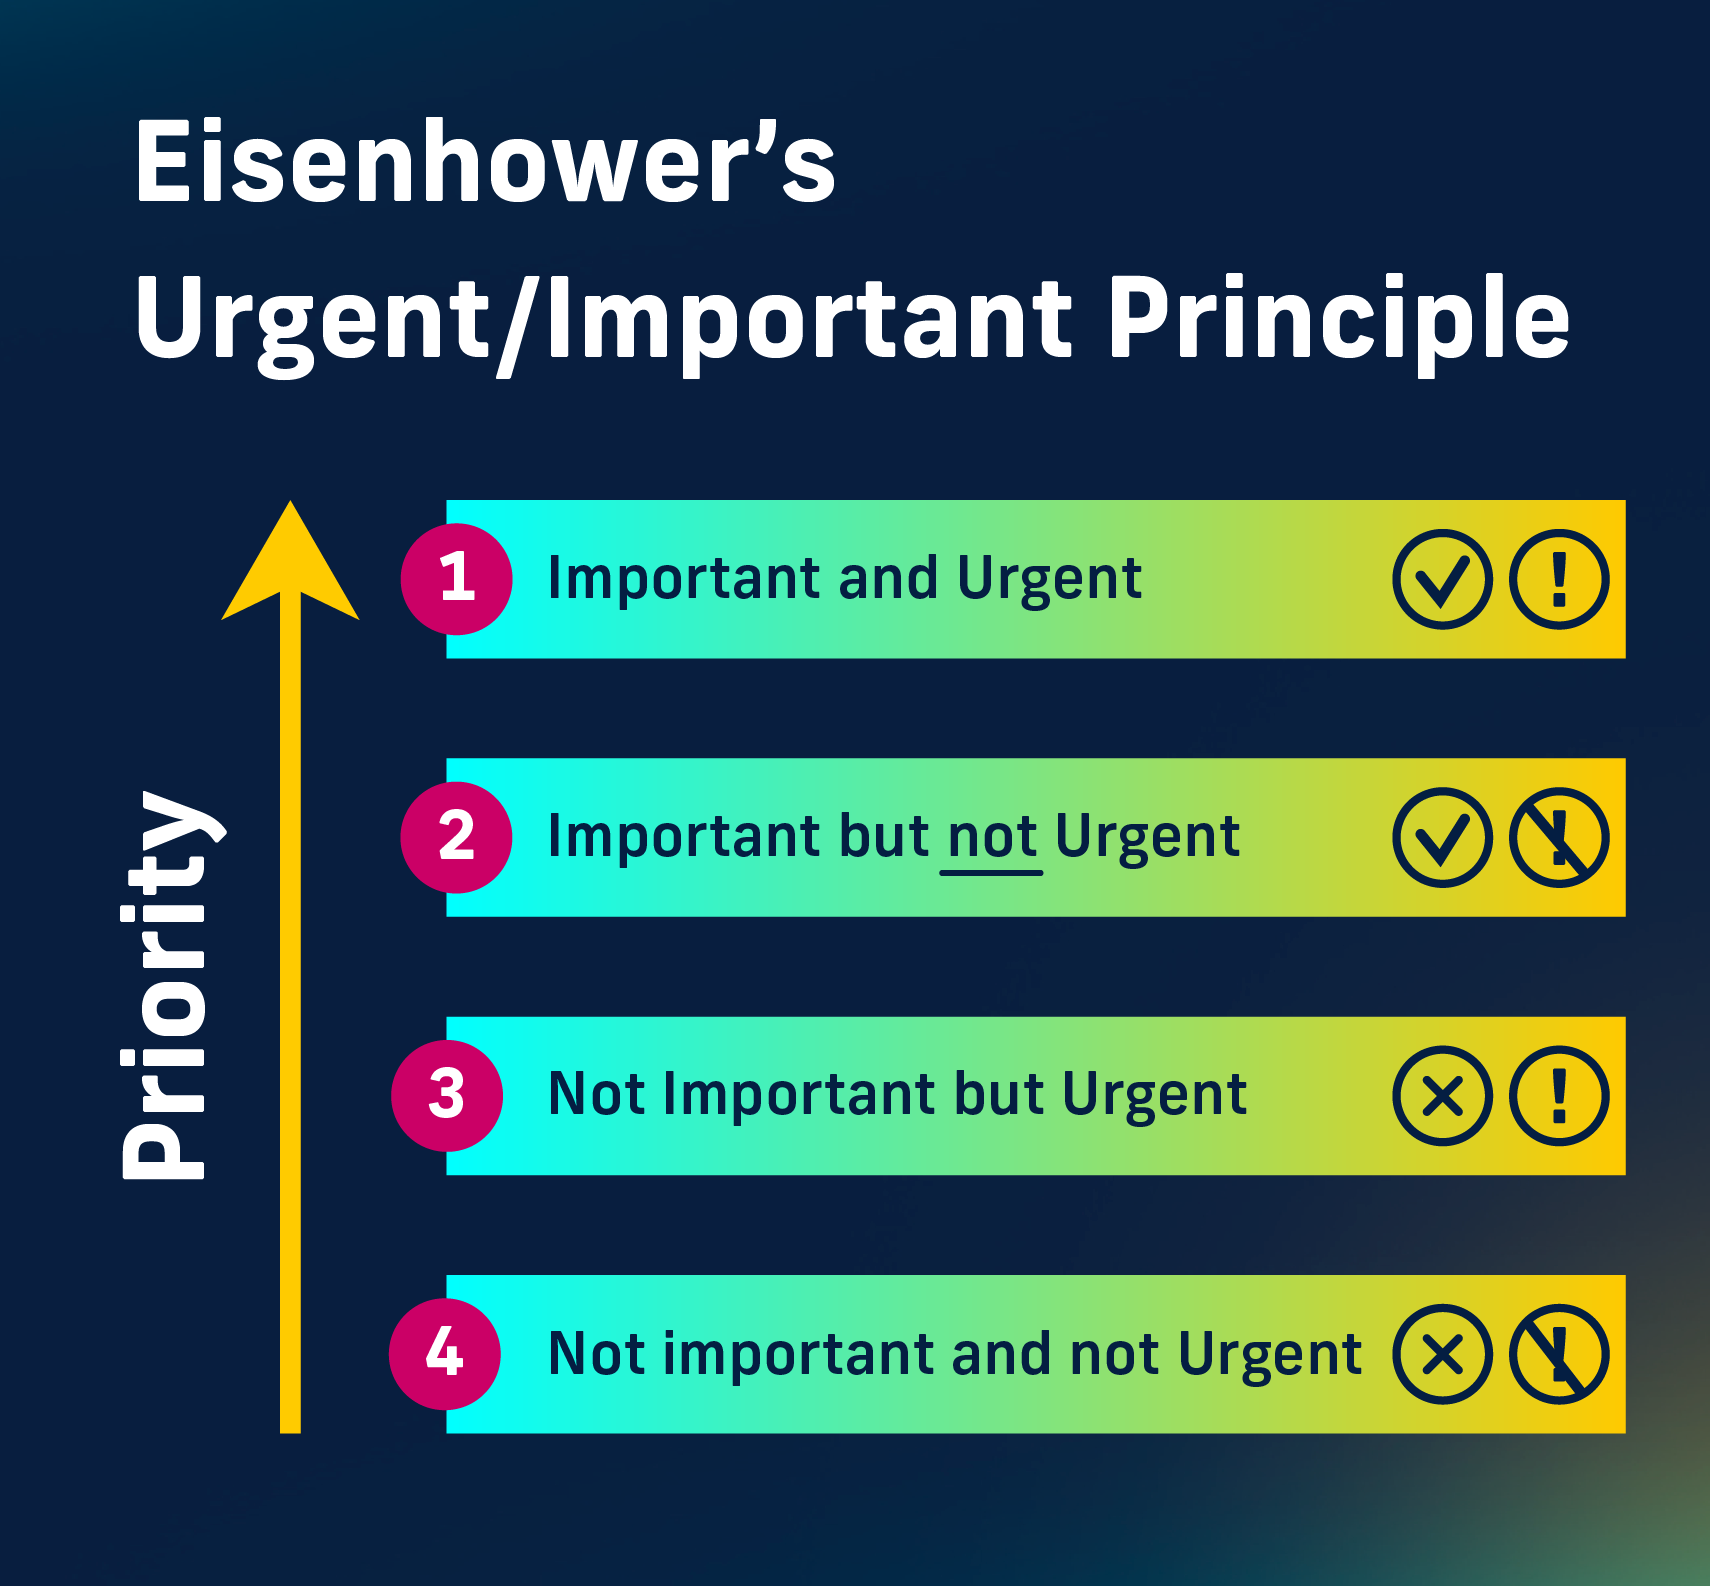 Eisenhower's Urgent/Important Principle